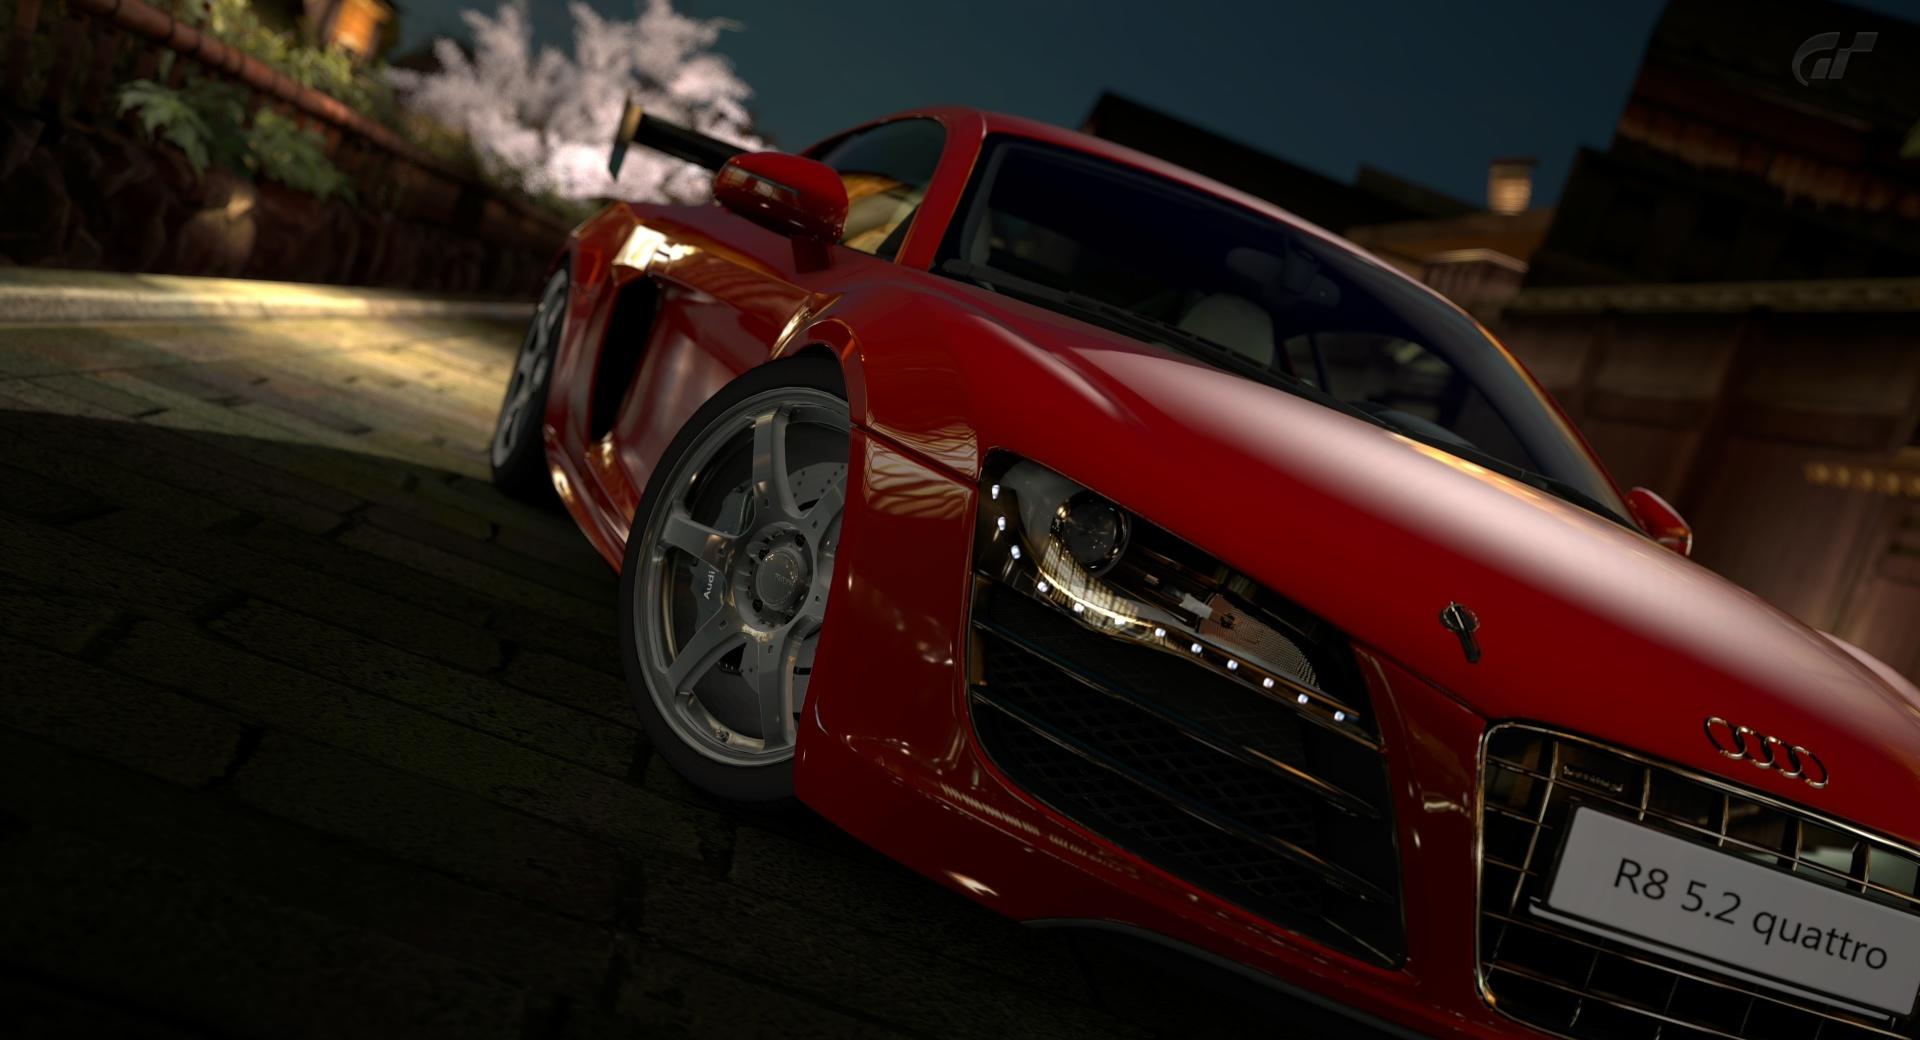 Gran Turismo 5 Audi R8 5 2 Quattro Red wallpapers HD quality